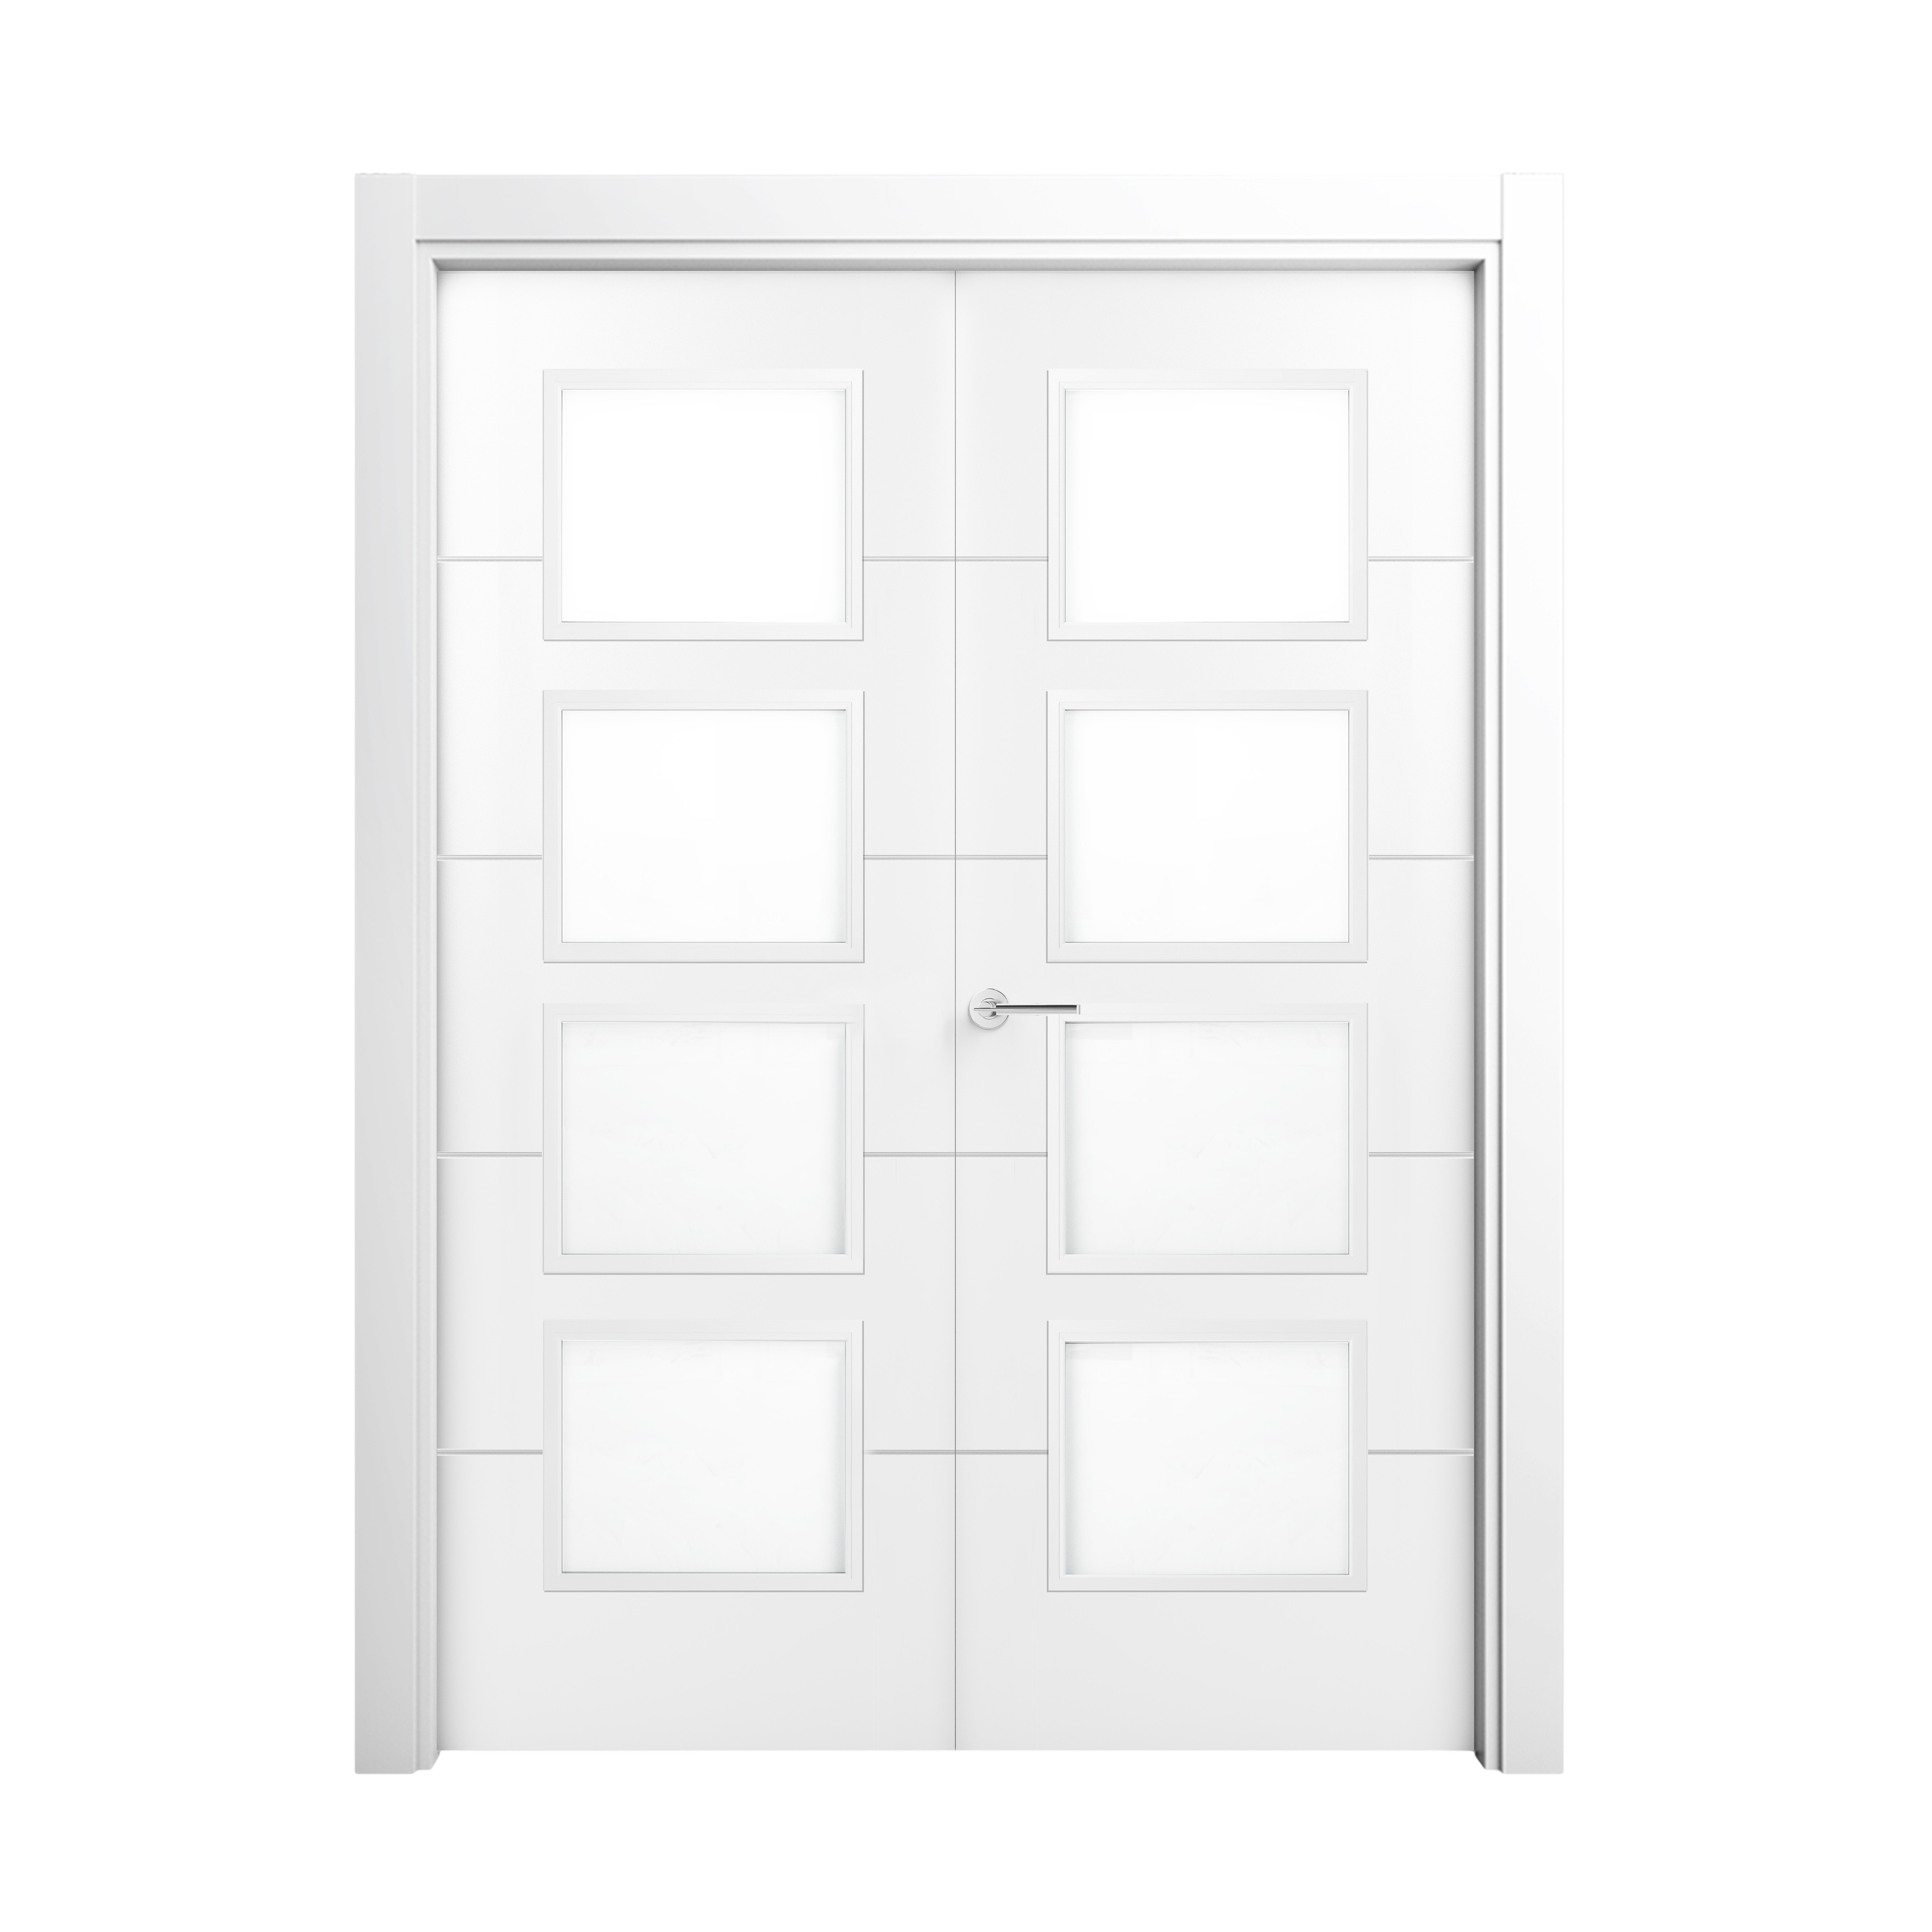 Puerta abatible lucerna blanca premium apertura derecha de 9x115 cm